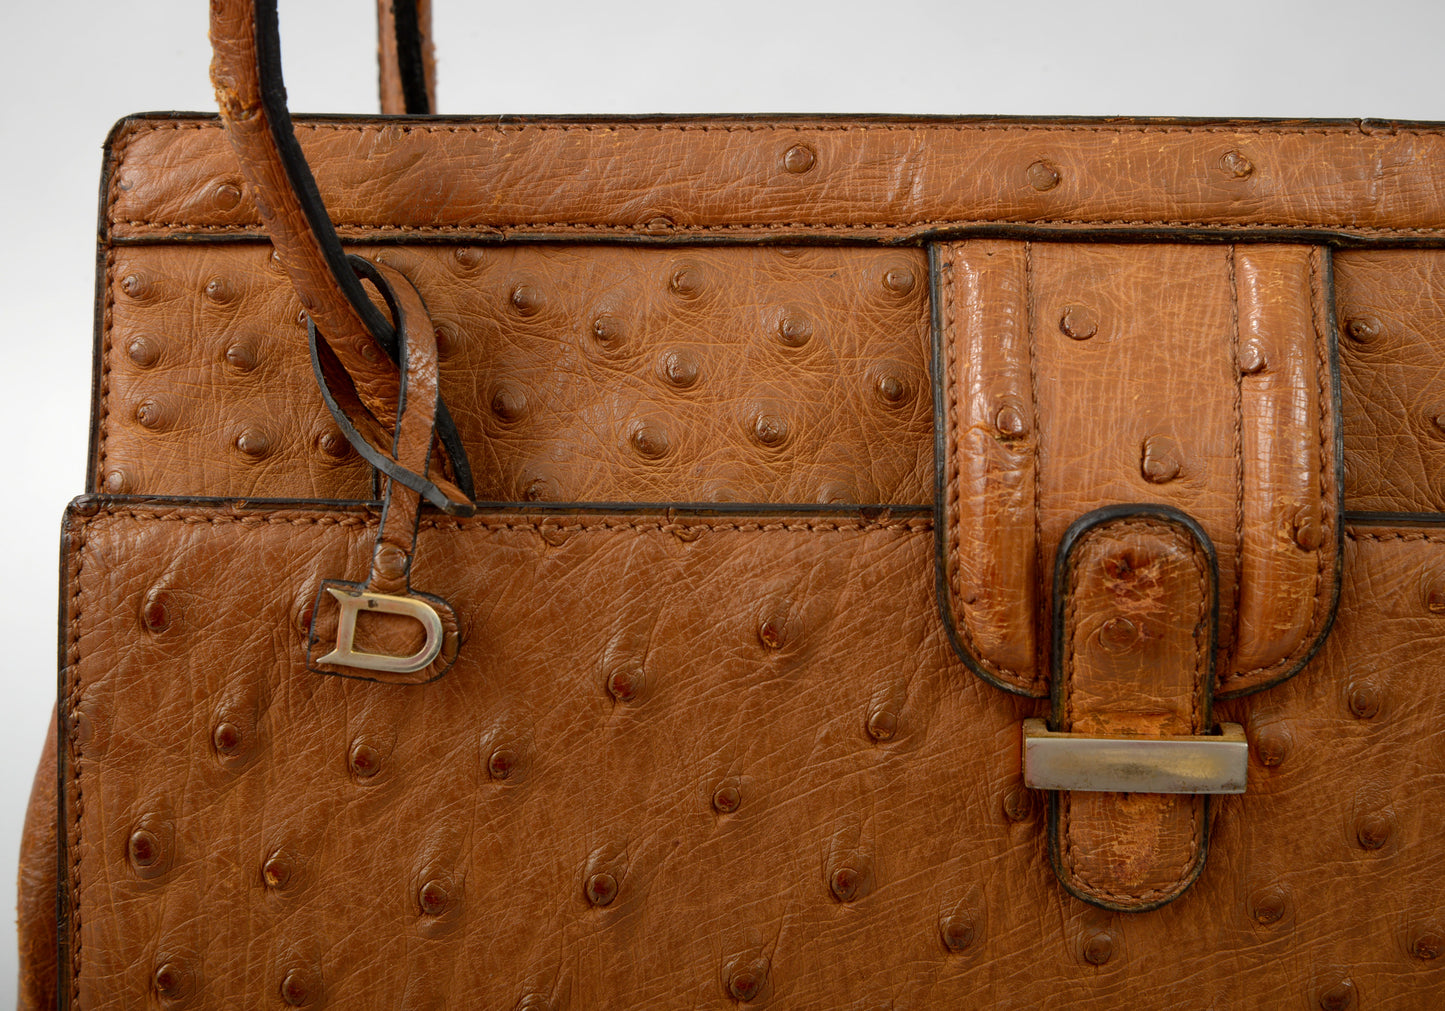 Delvaux vintage top handle handbag in ostrich leather 1966